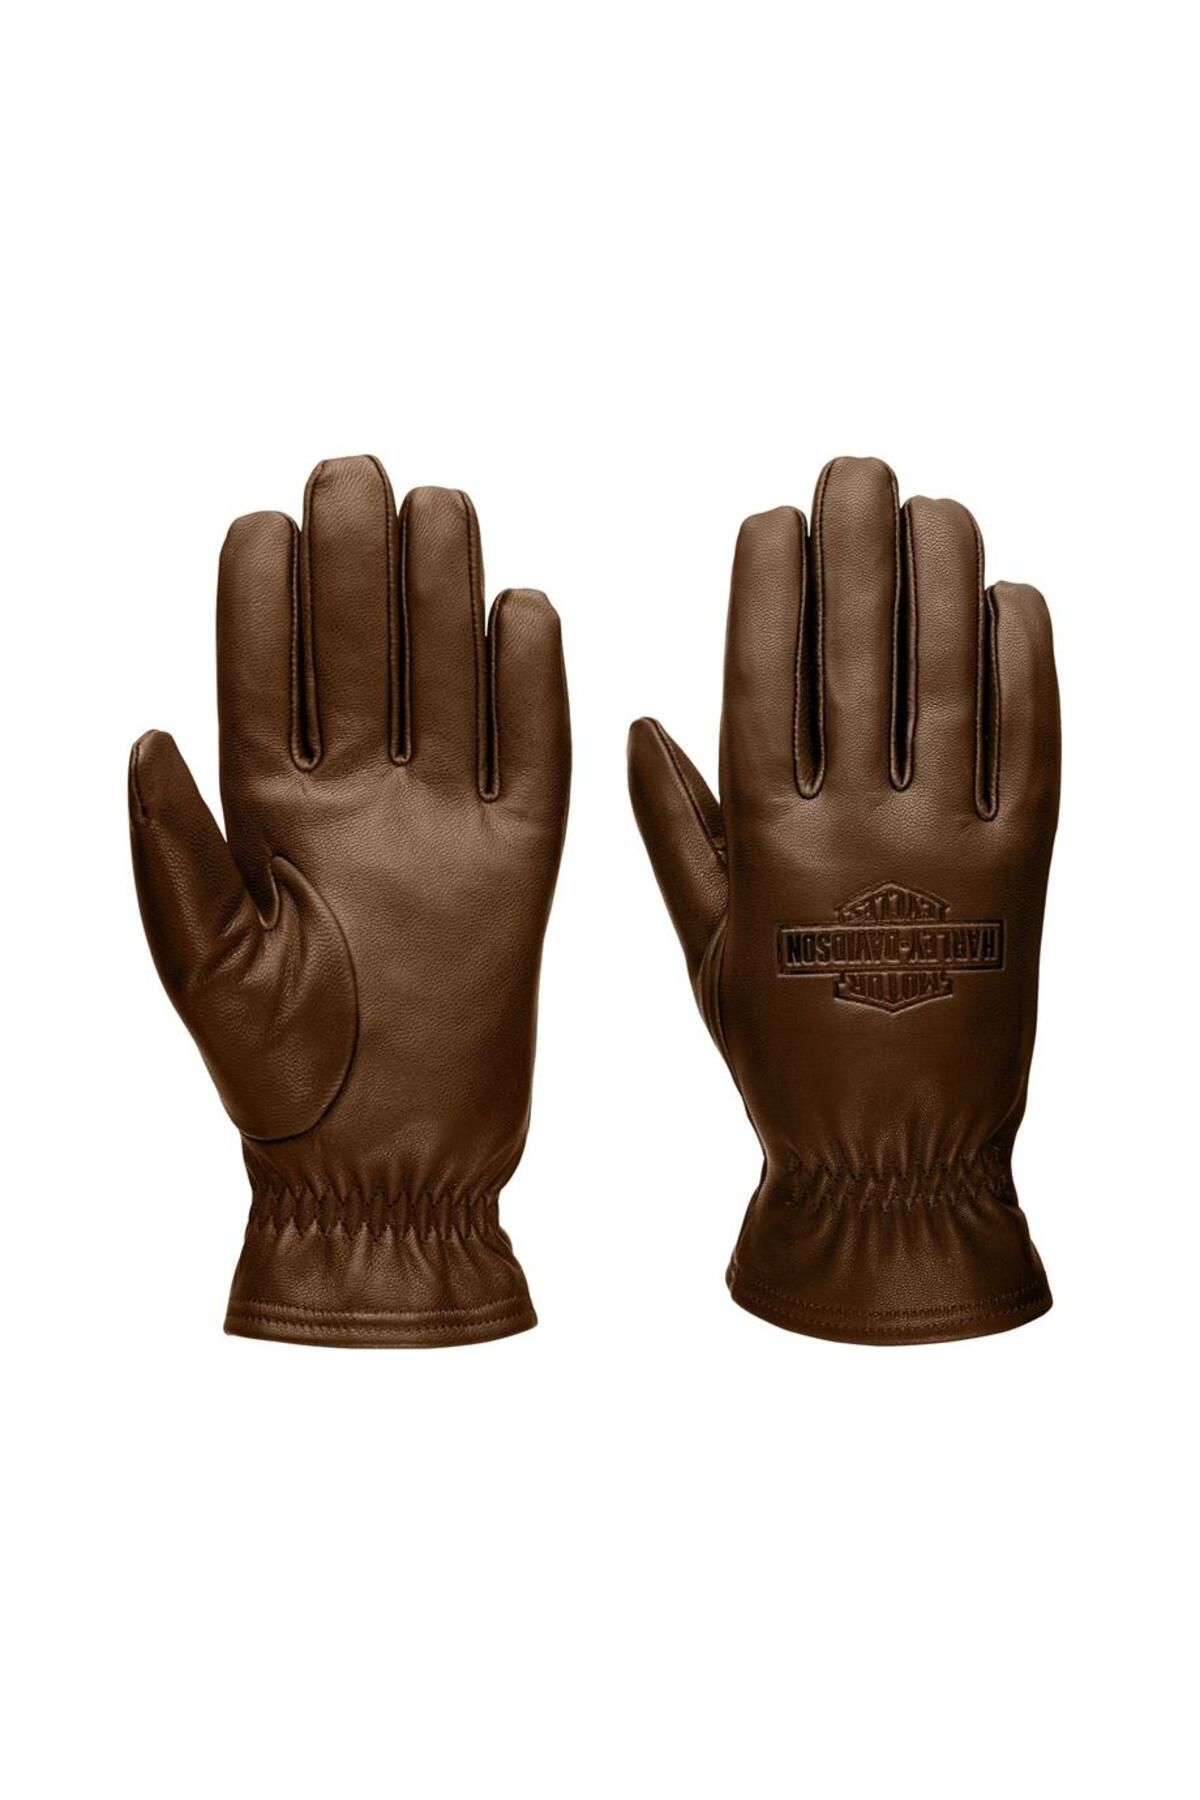 Harley Davidson Harley-Davidson Men's Full Speed Leather Gloves - Brown Leather